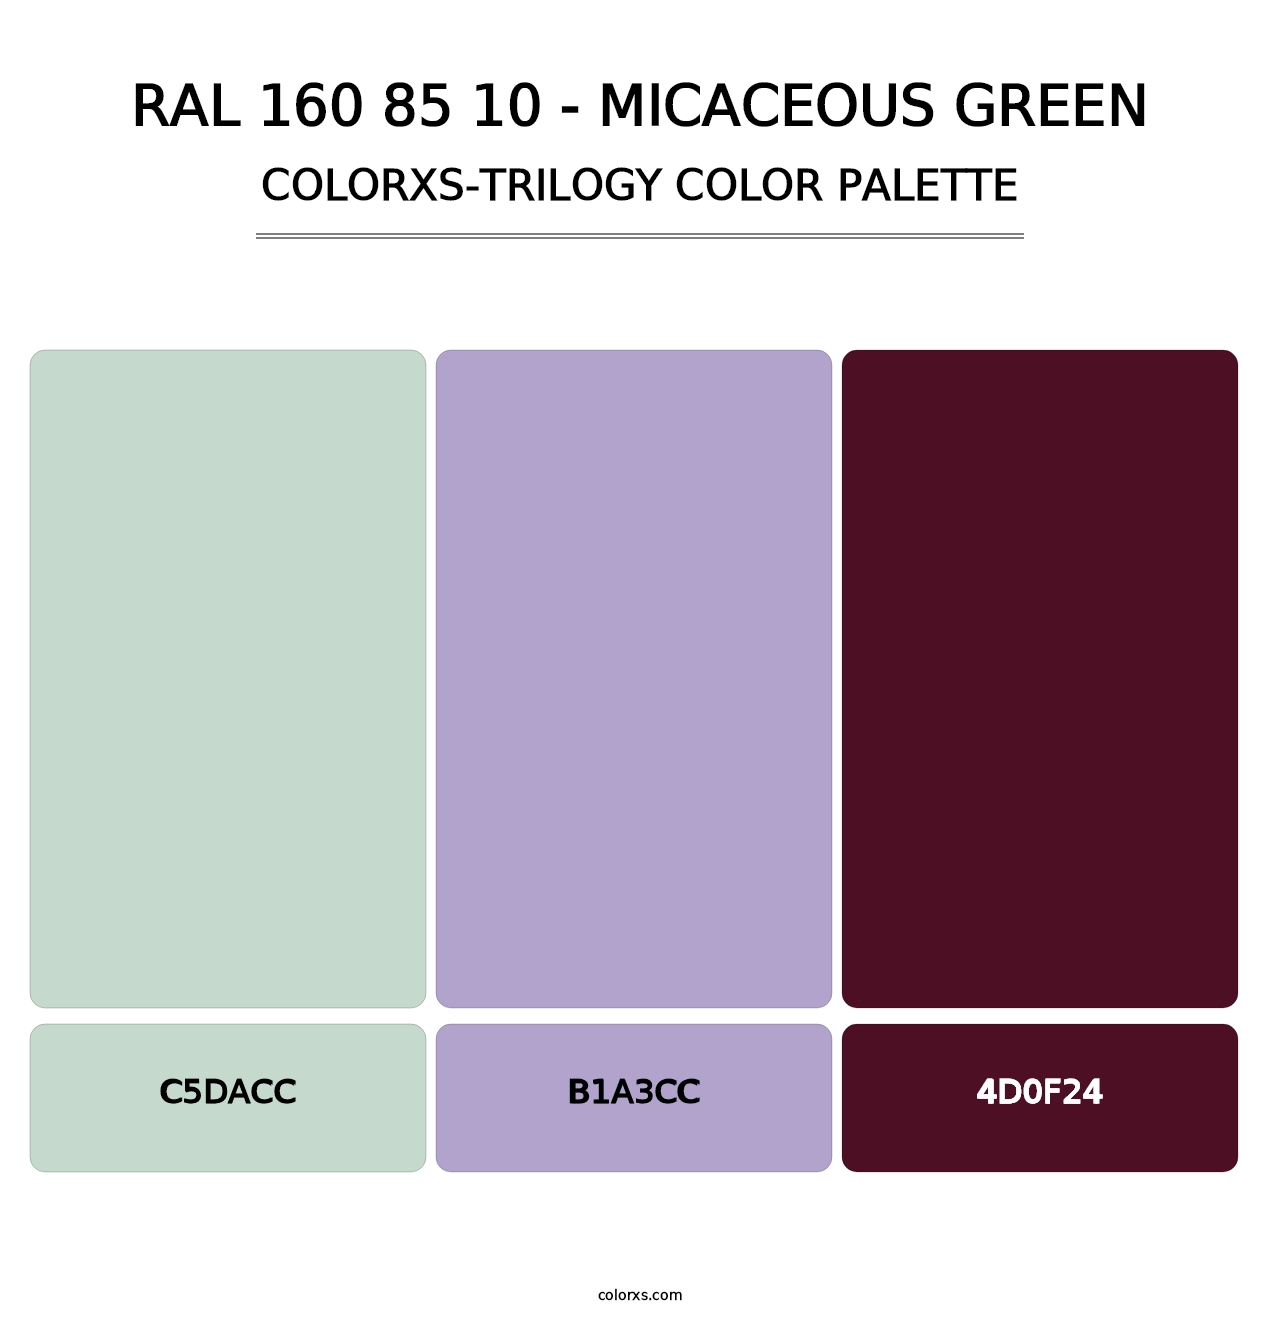 RAL 160 85 10 - Micaceous Green - Colorxs Trilogy Palette